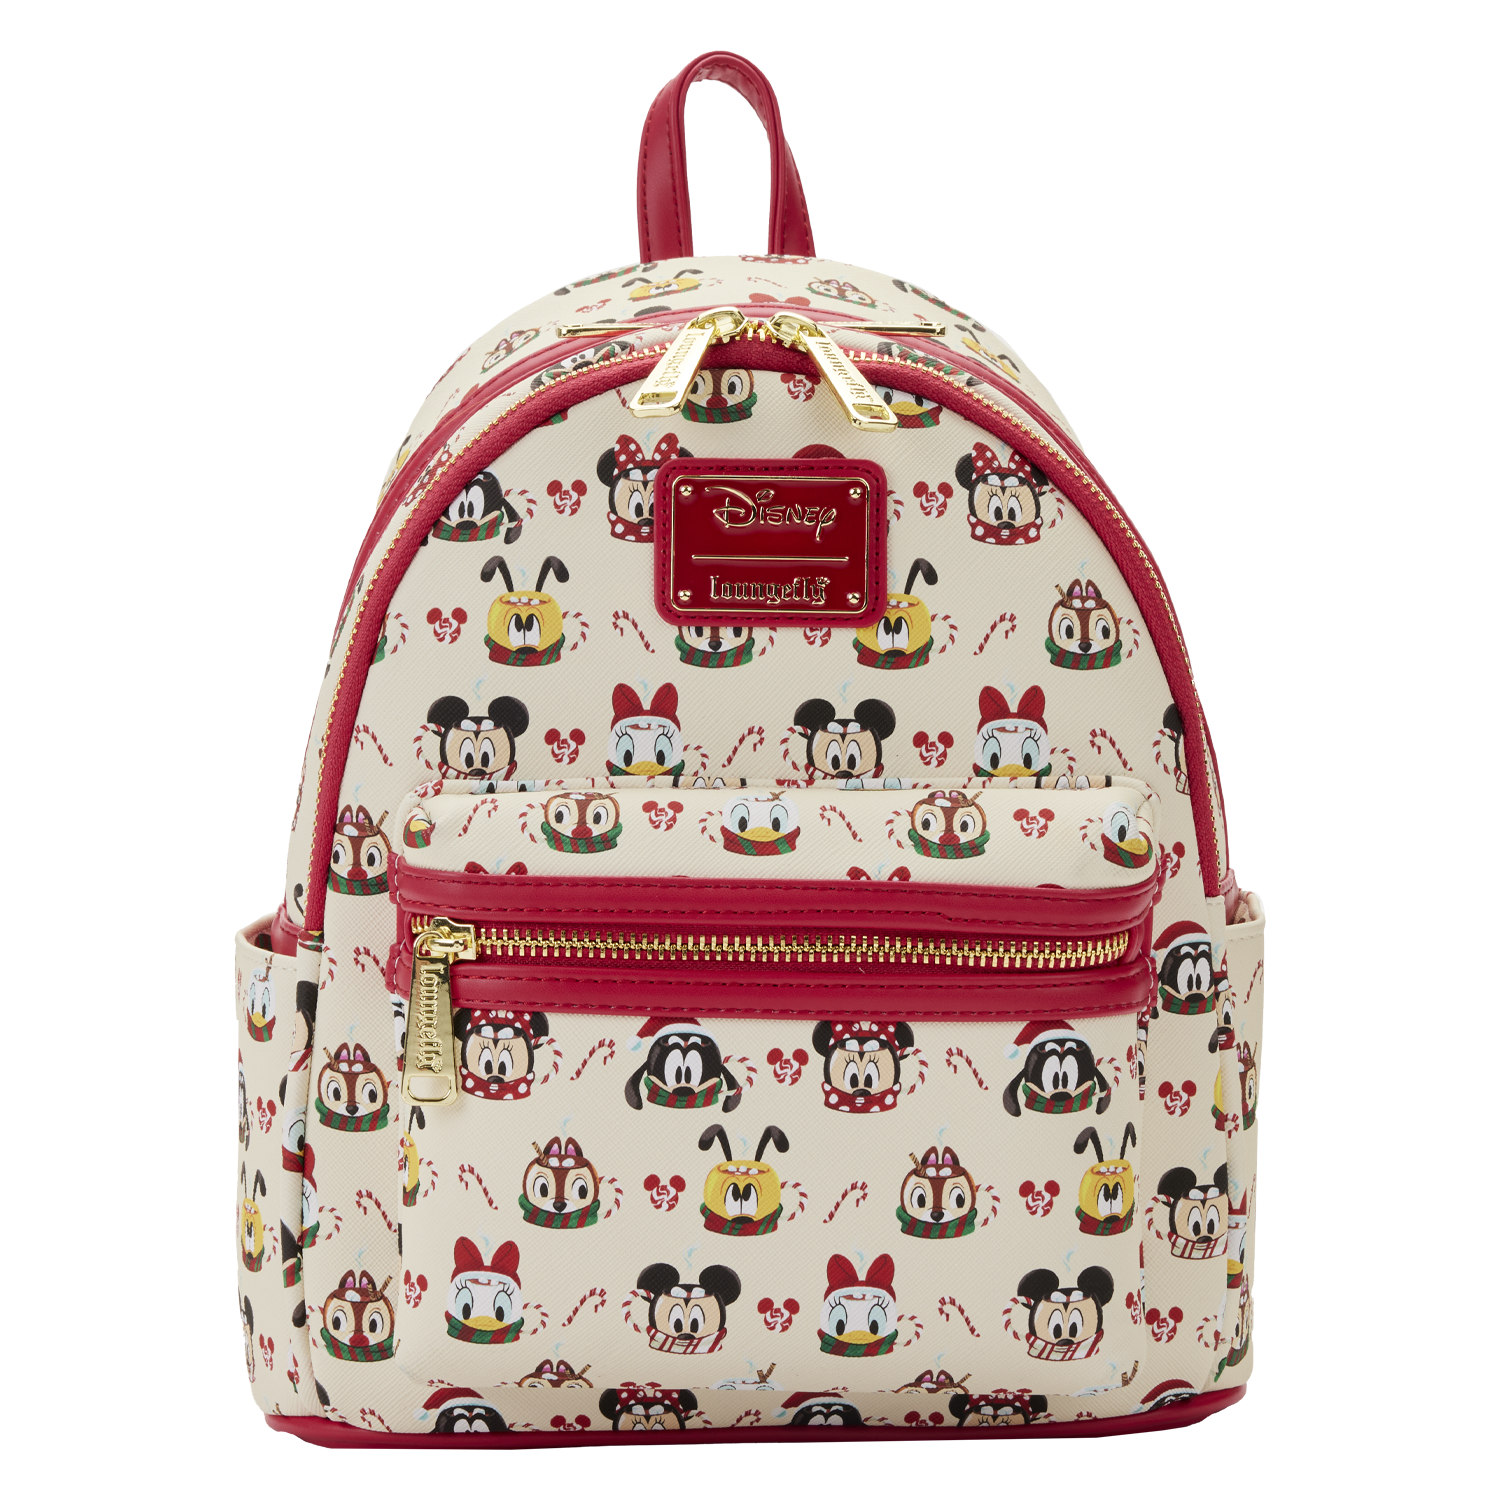 Printed Backpack - Light orange-pink/Minnie Mouse - Kids